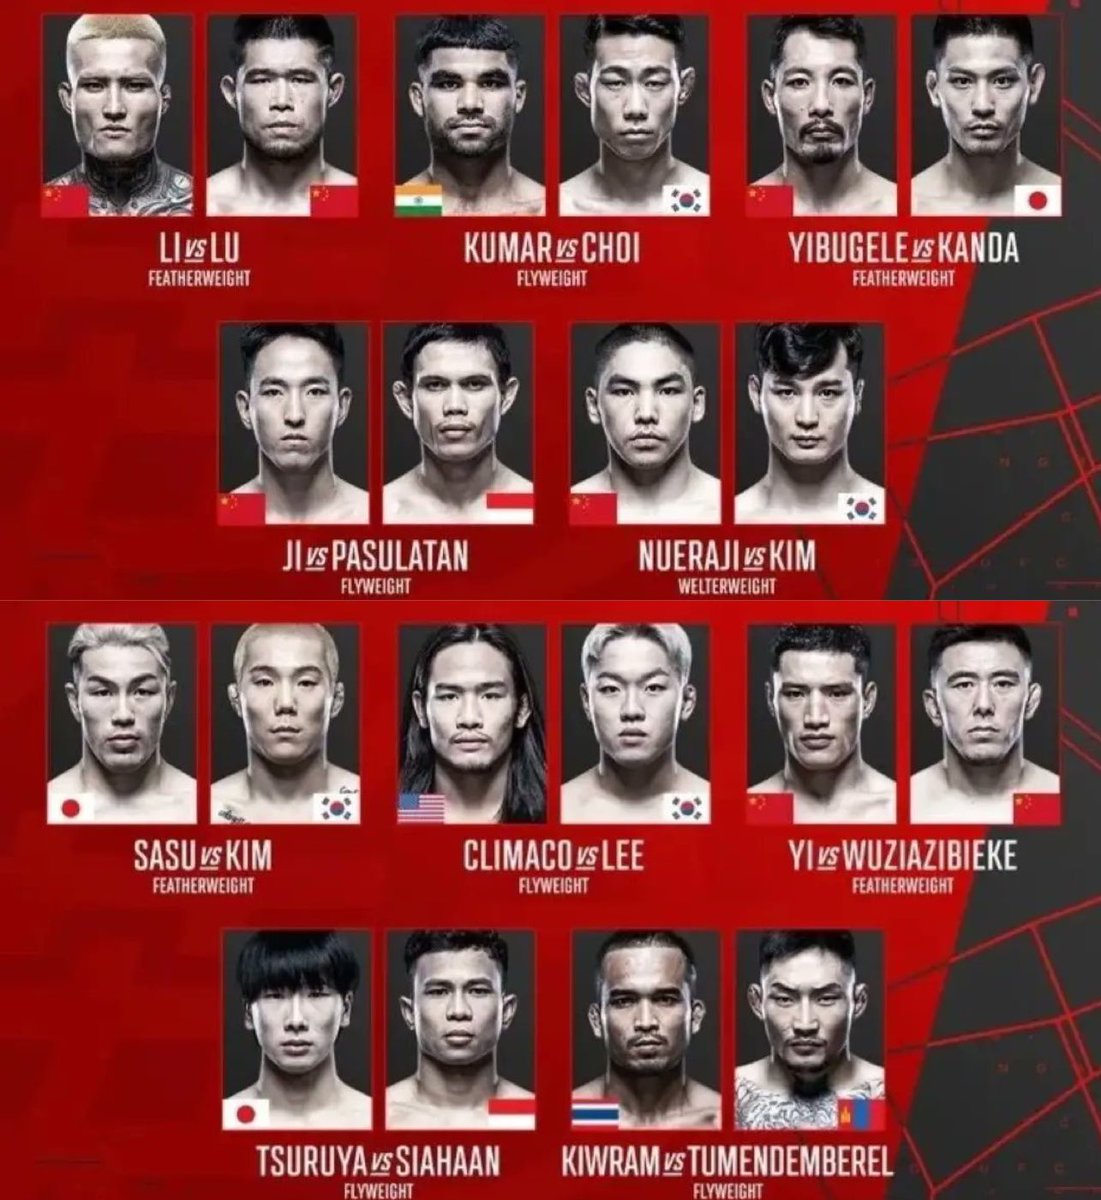 Road to UFC, lots of upcoming asian talent. Li vs Lu should be a banger.